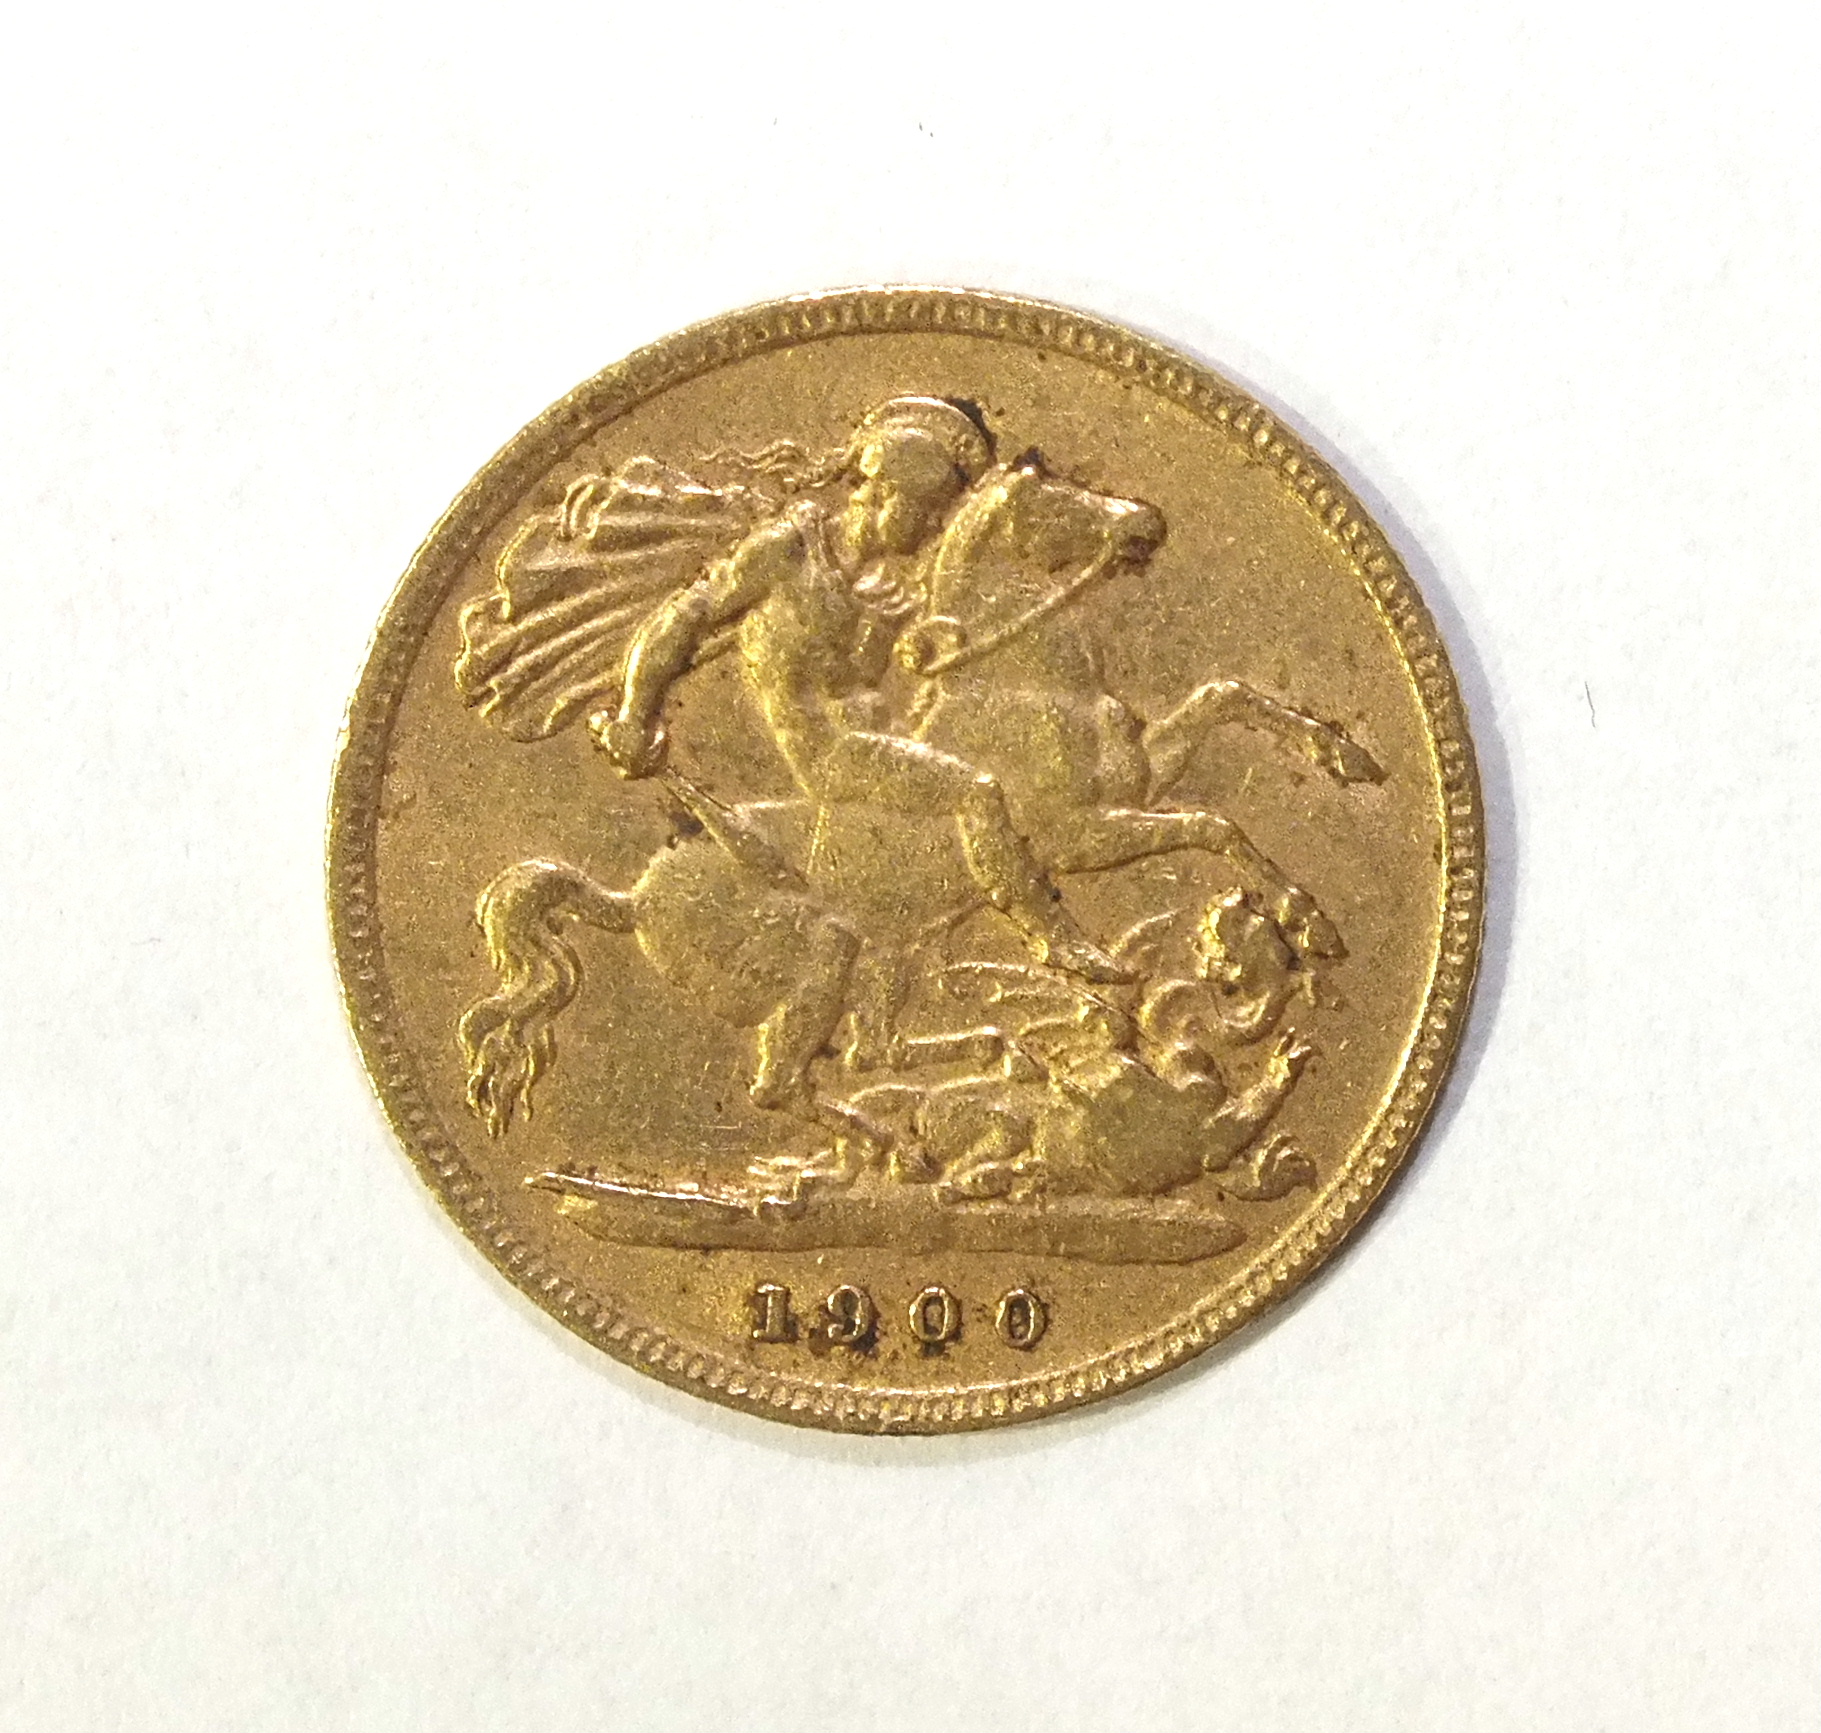 A Queen Victoria 1900 gold half sovereign. - Image 4 of 4